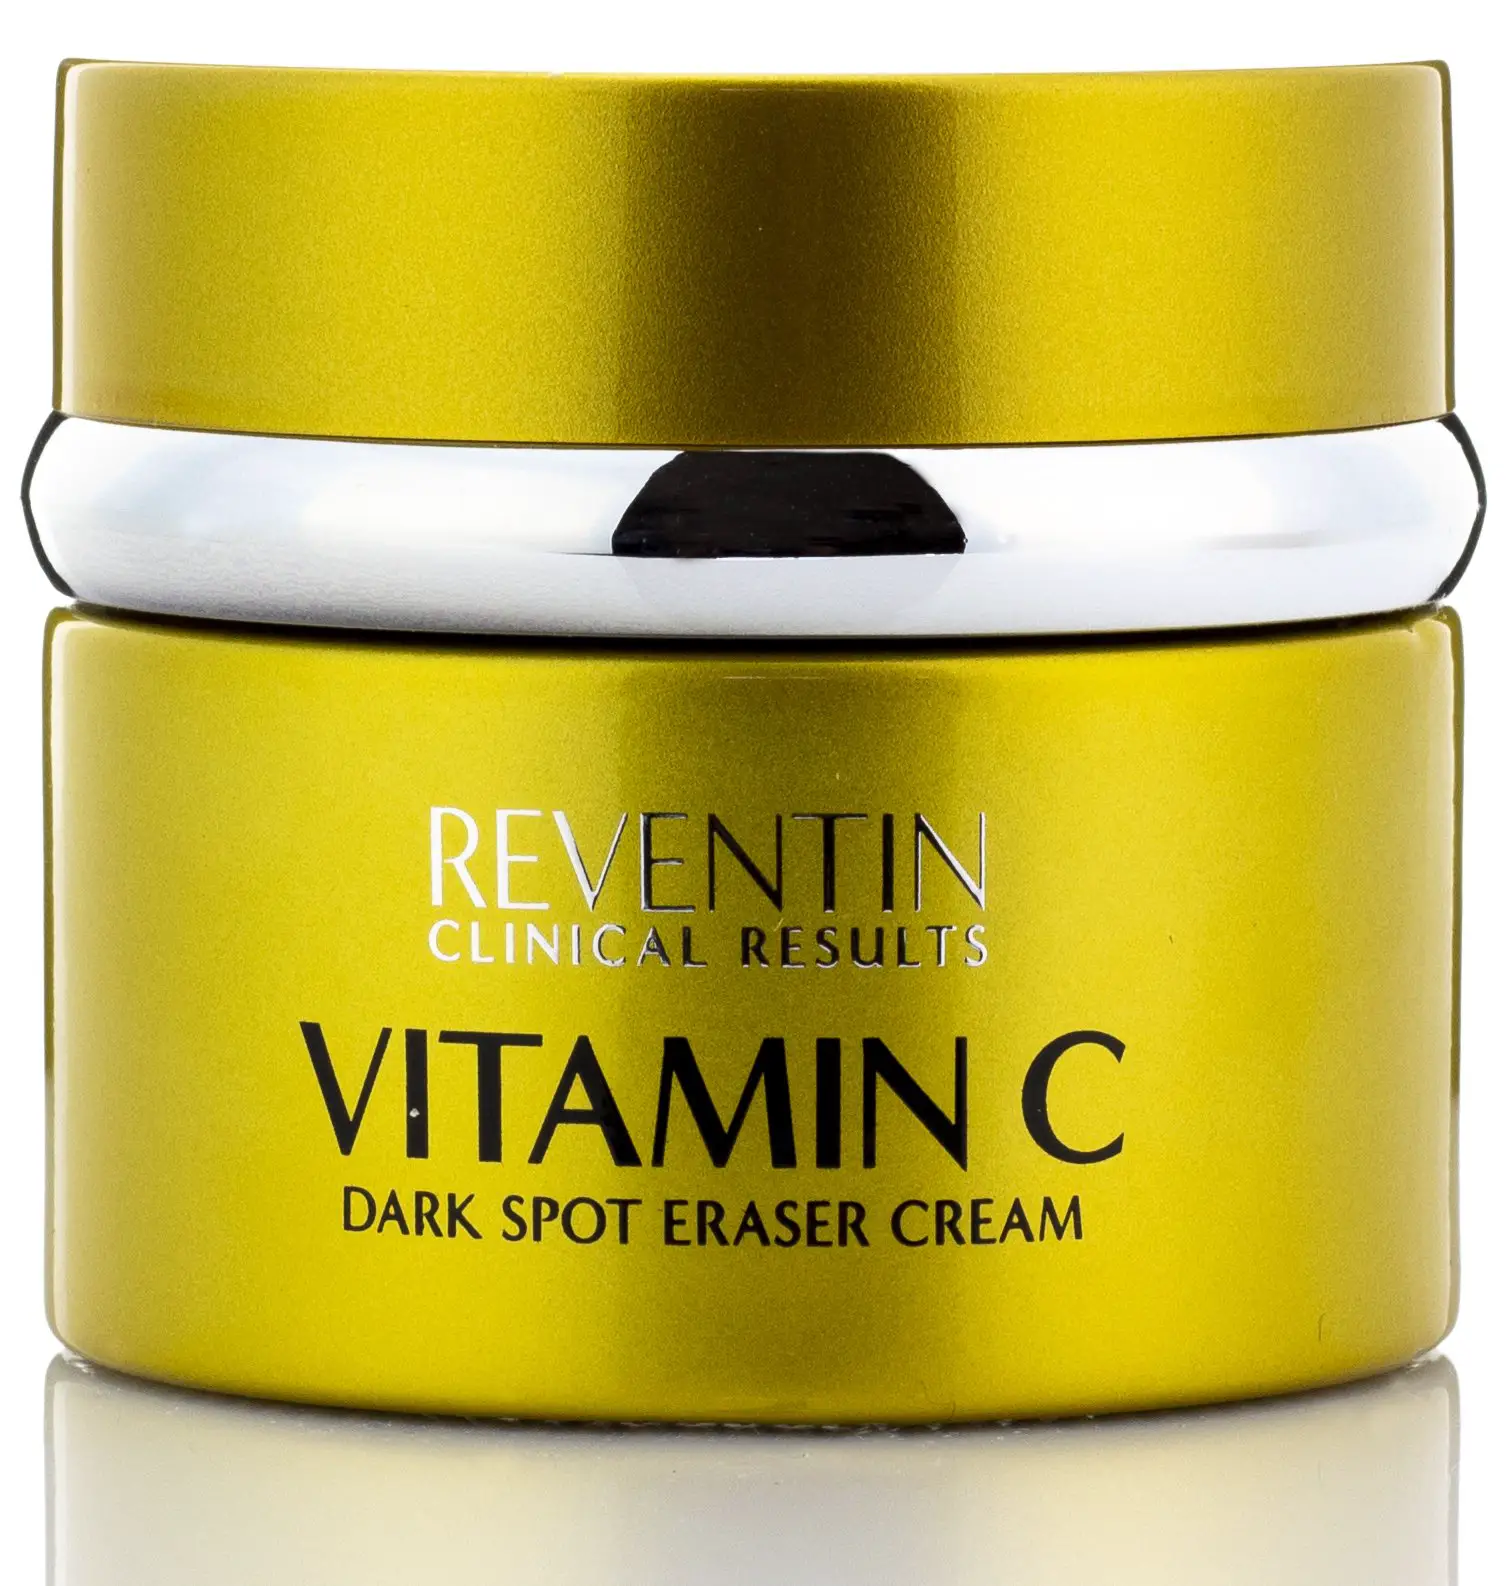 Reventin Clinical Results Vitamin C Dark Spot Eraser Cream ...